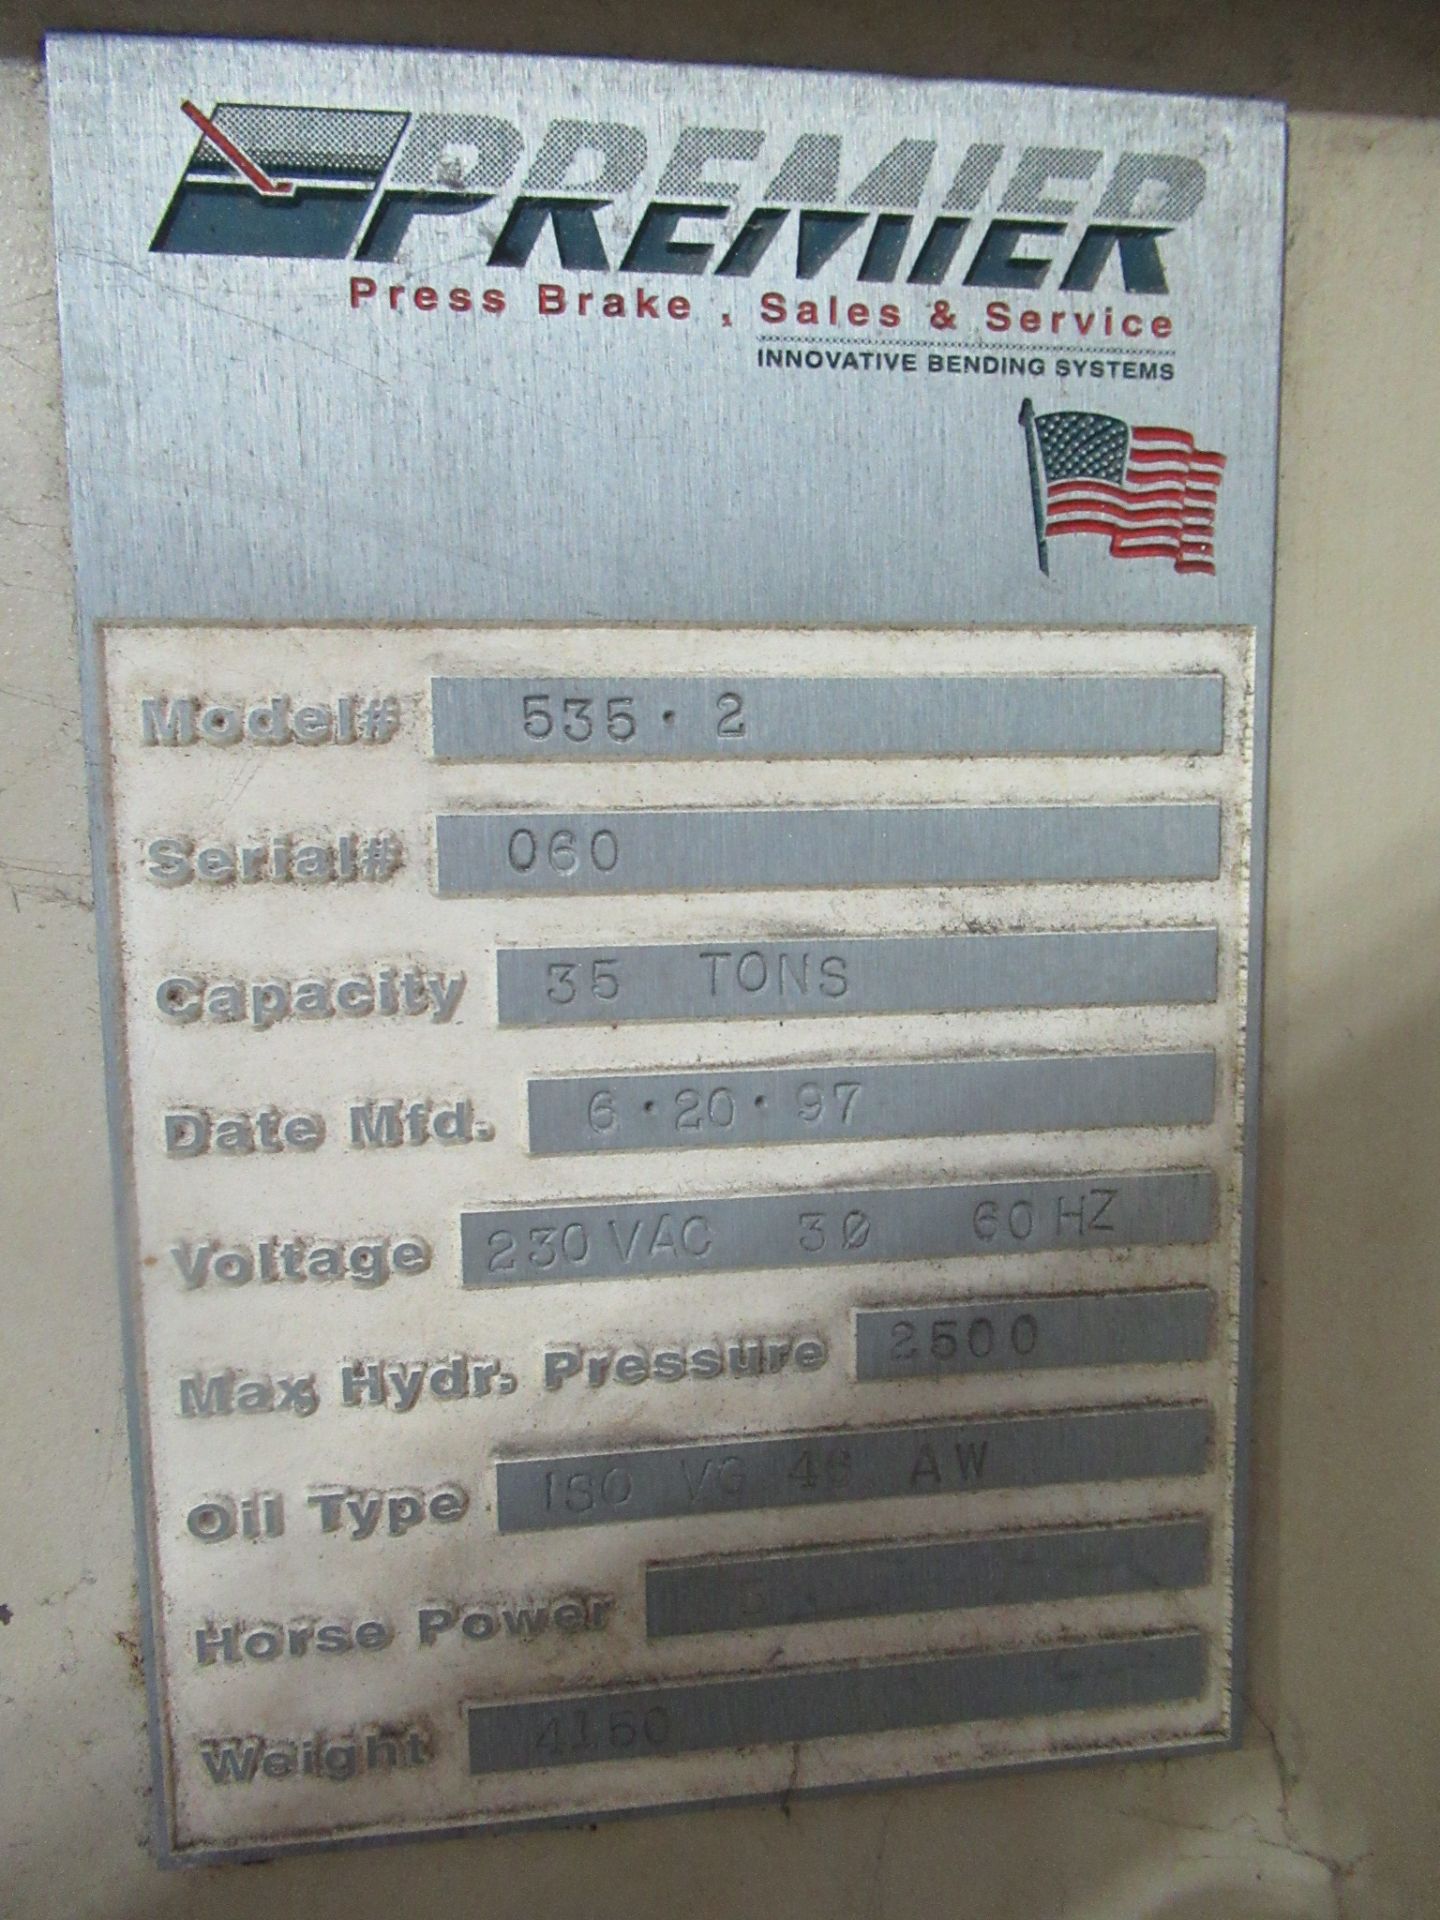 PRESSBRAKE, PREMIER 35 T. CAP. MDL. 535.2, new 1997, 5' cap., Autobend 7 control, 5 HP motor, - Image 3 of 4